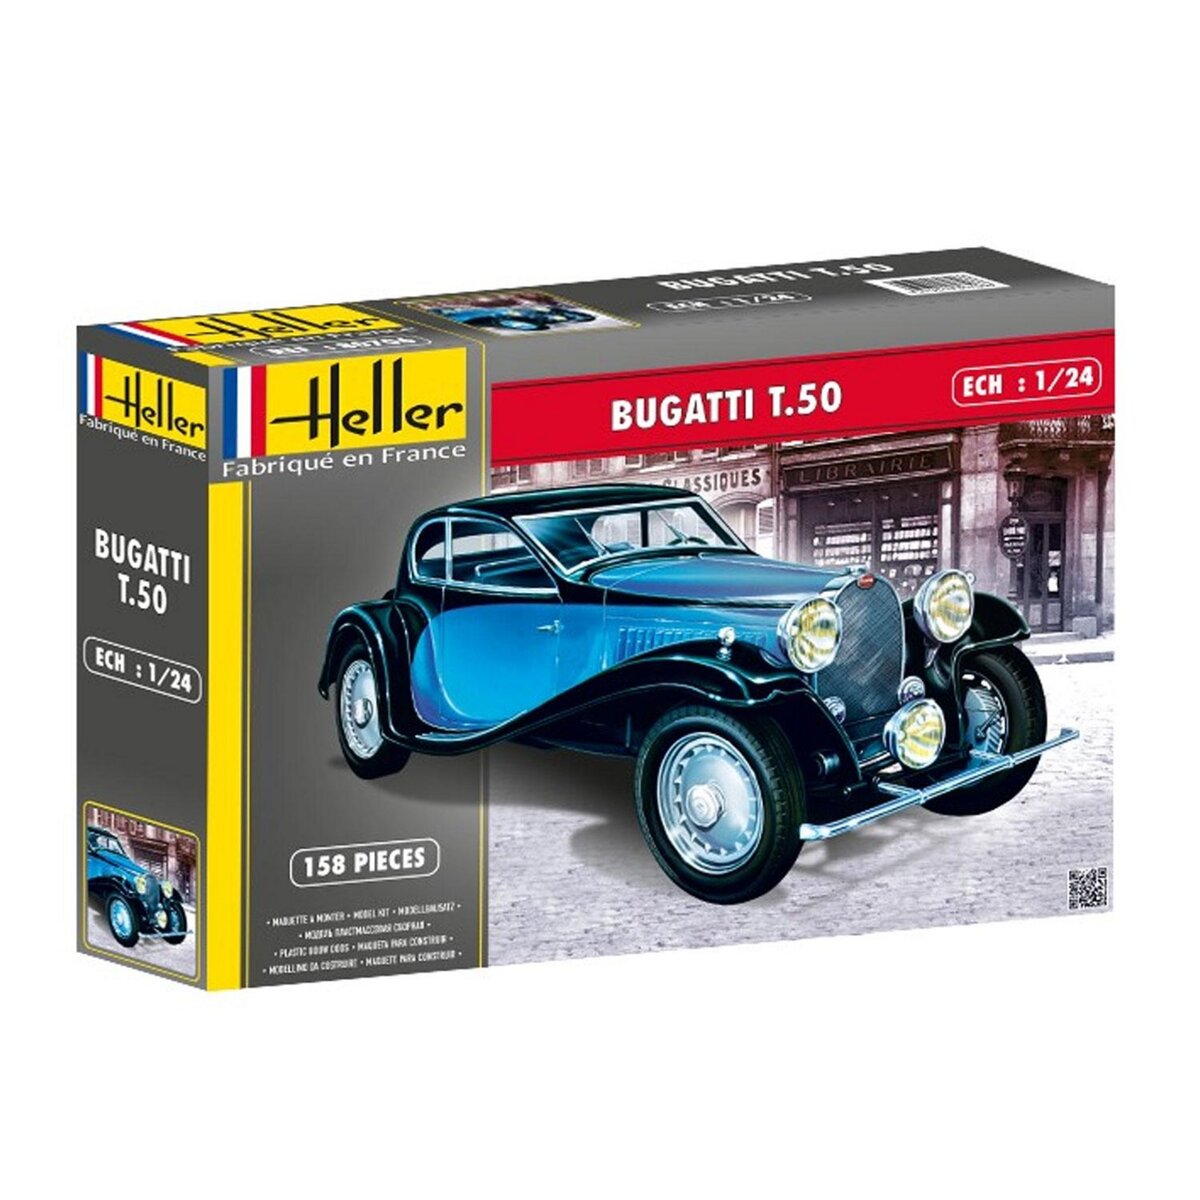 Heller Maquette voiture : Bugatti T.50